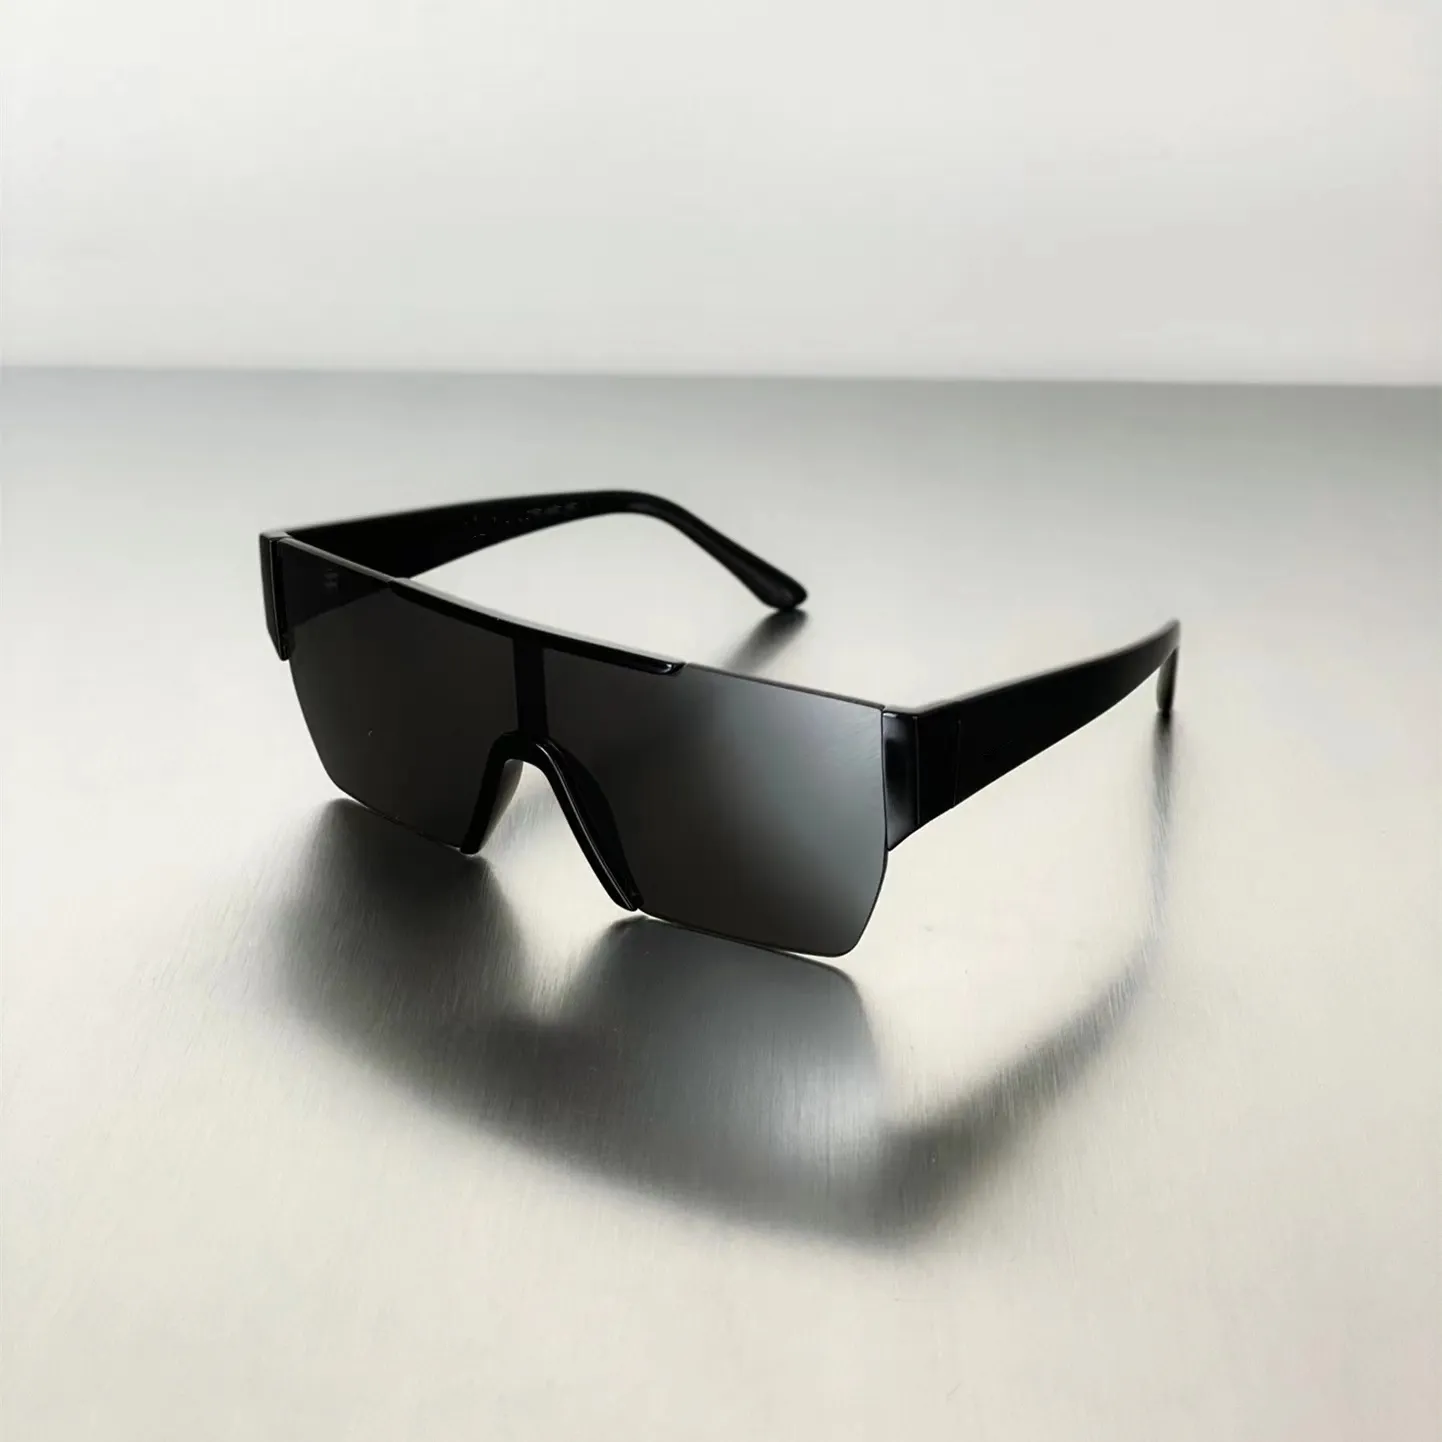 Designer sunglasses for women Internet celebrity hip-hop mens sunglasses new style one-piece fashion sun glasses outdoor street Trends glasses